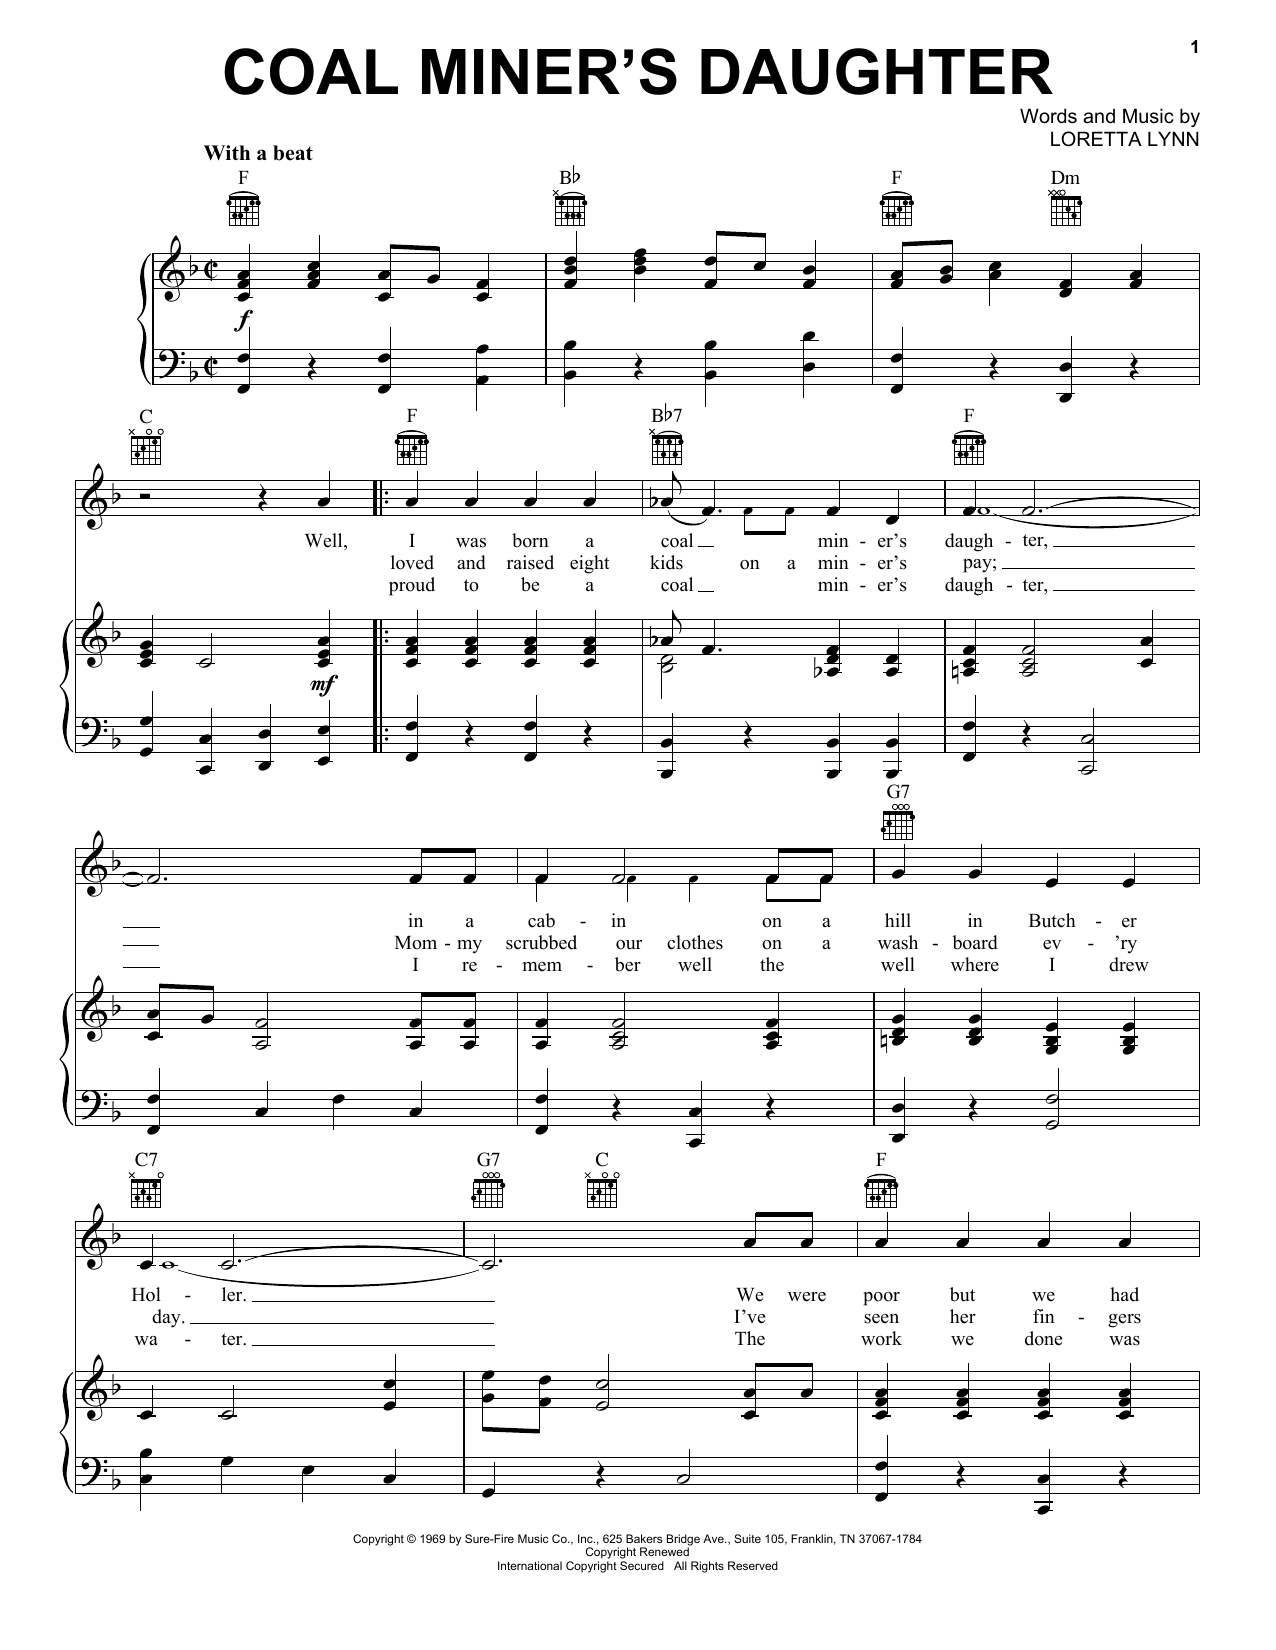 Loretta Lynn Coal Miner's Daughter Sheet Music Notes & Chords for Lyrics & Chords - Download or Print PDF